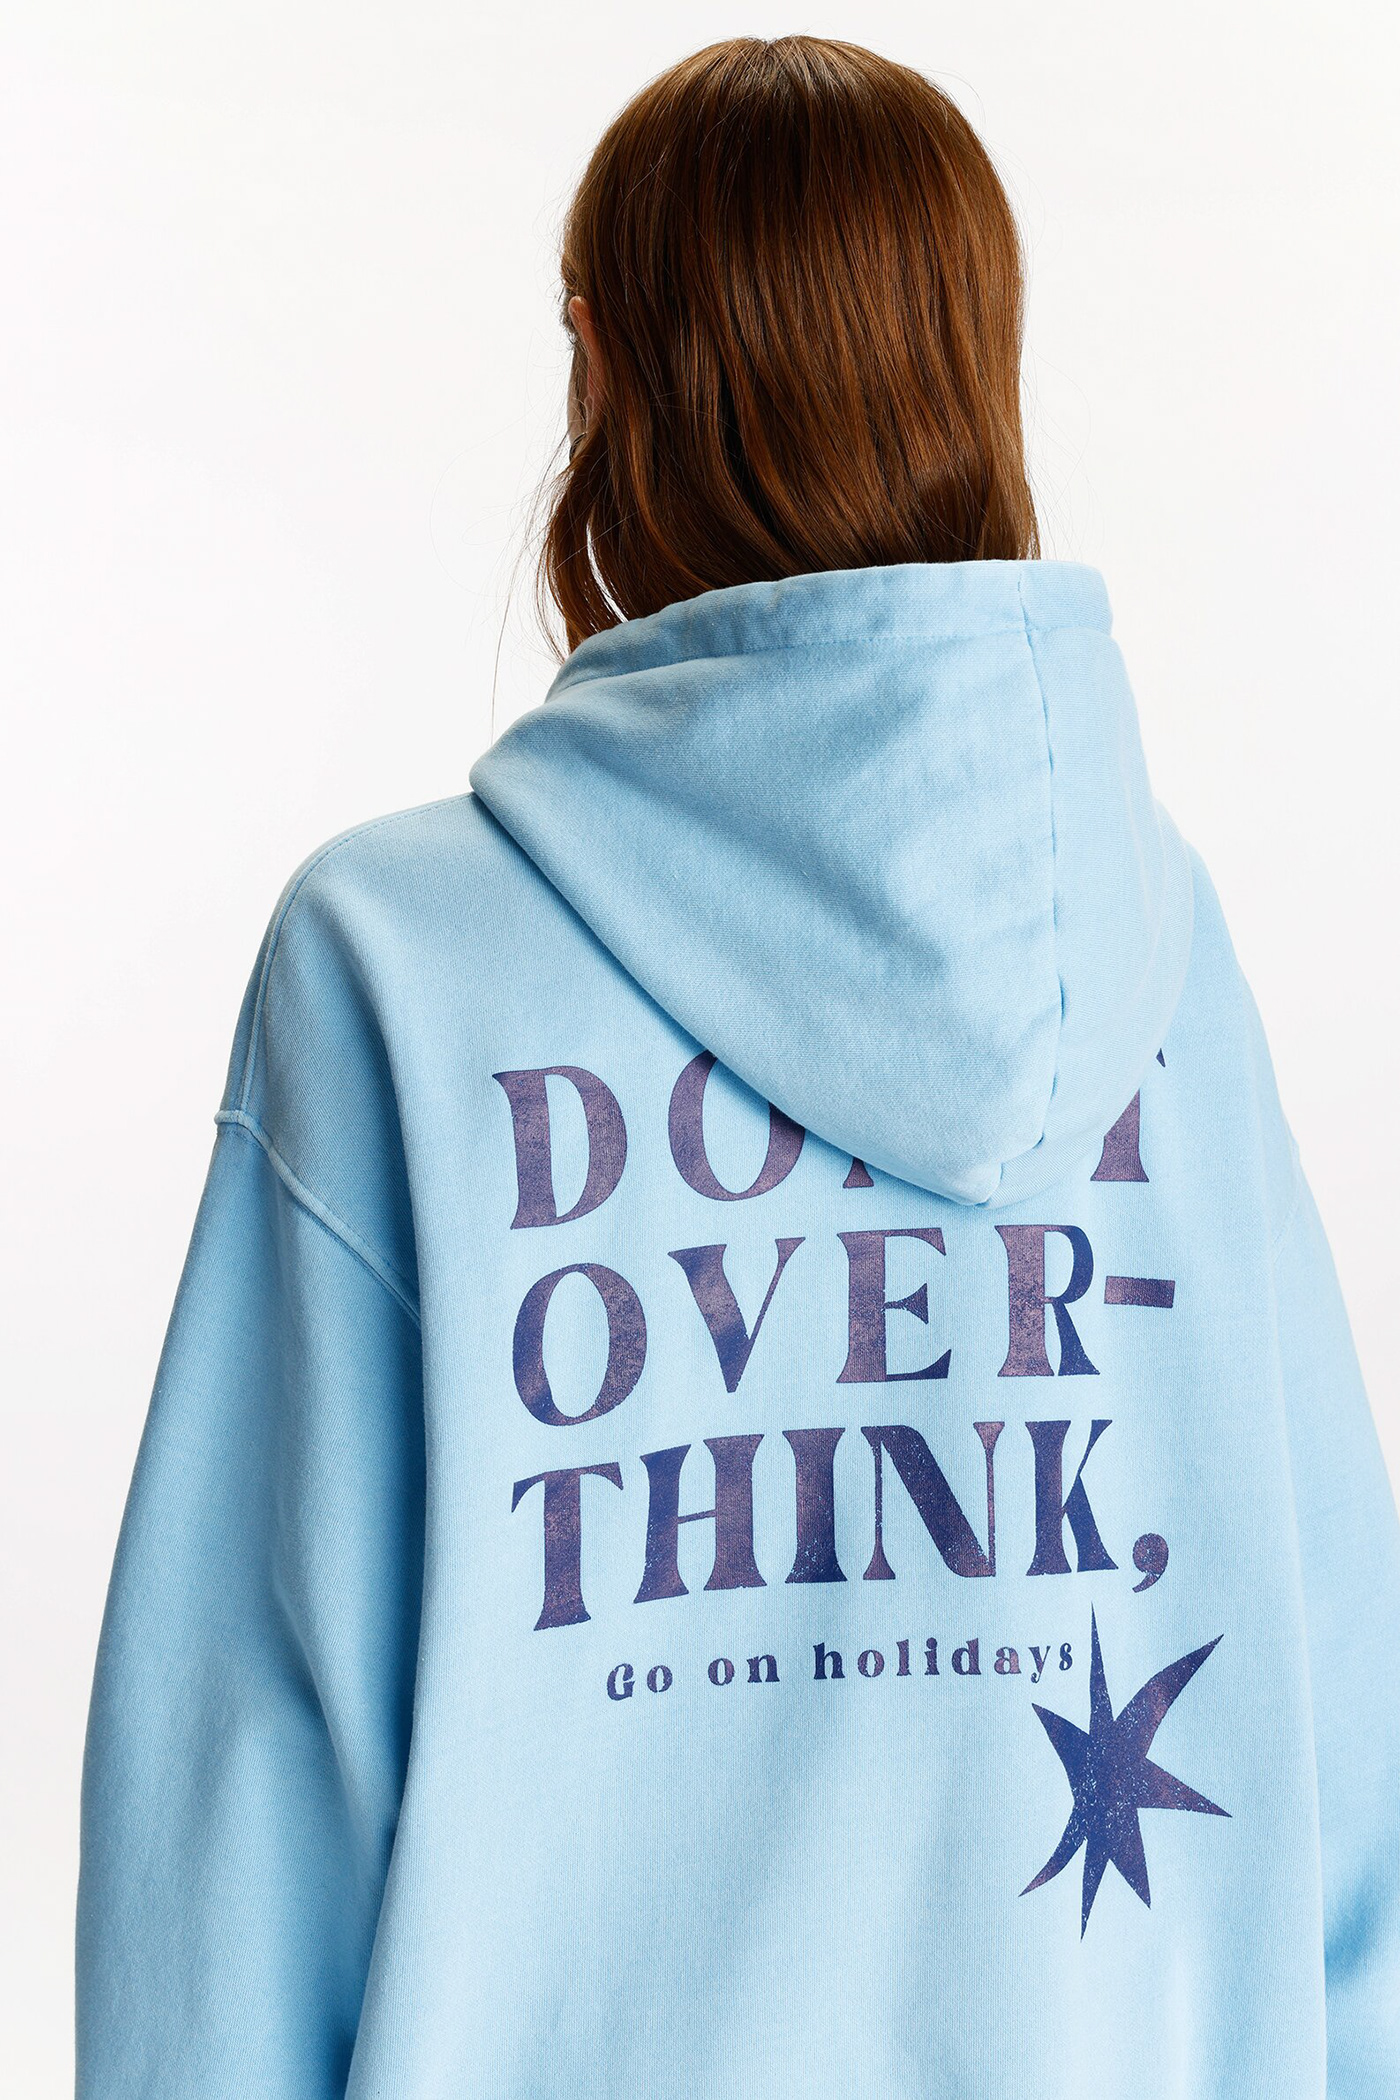 hoodie Fashion  Clothing apparel Lefties teen ILLUSTRATION  Grpahic design